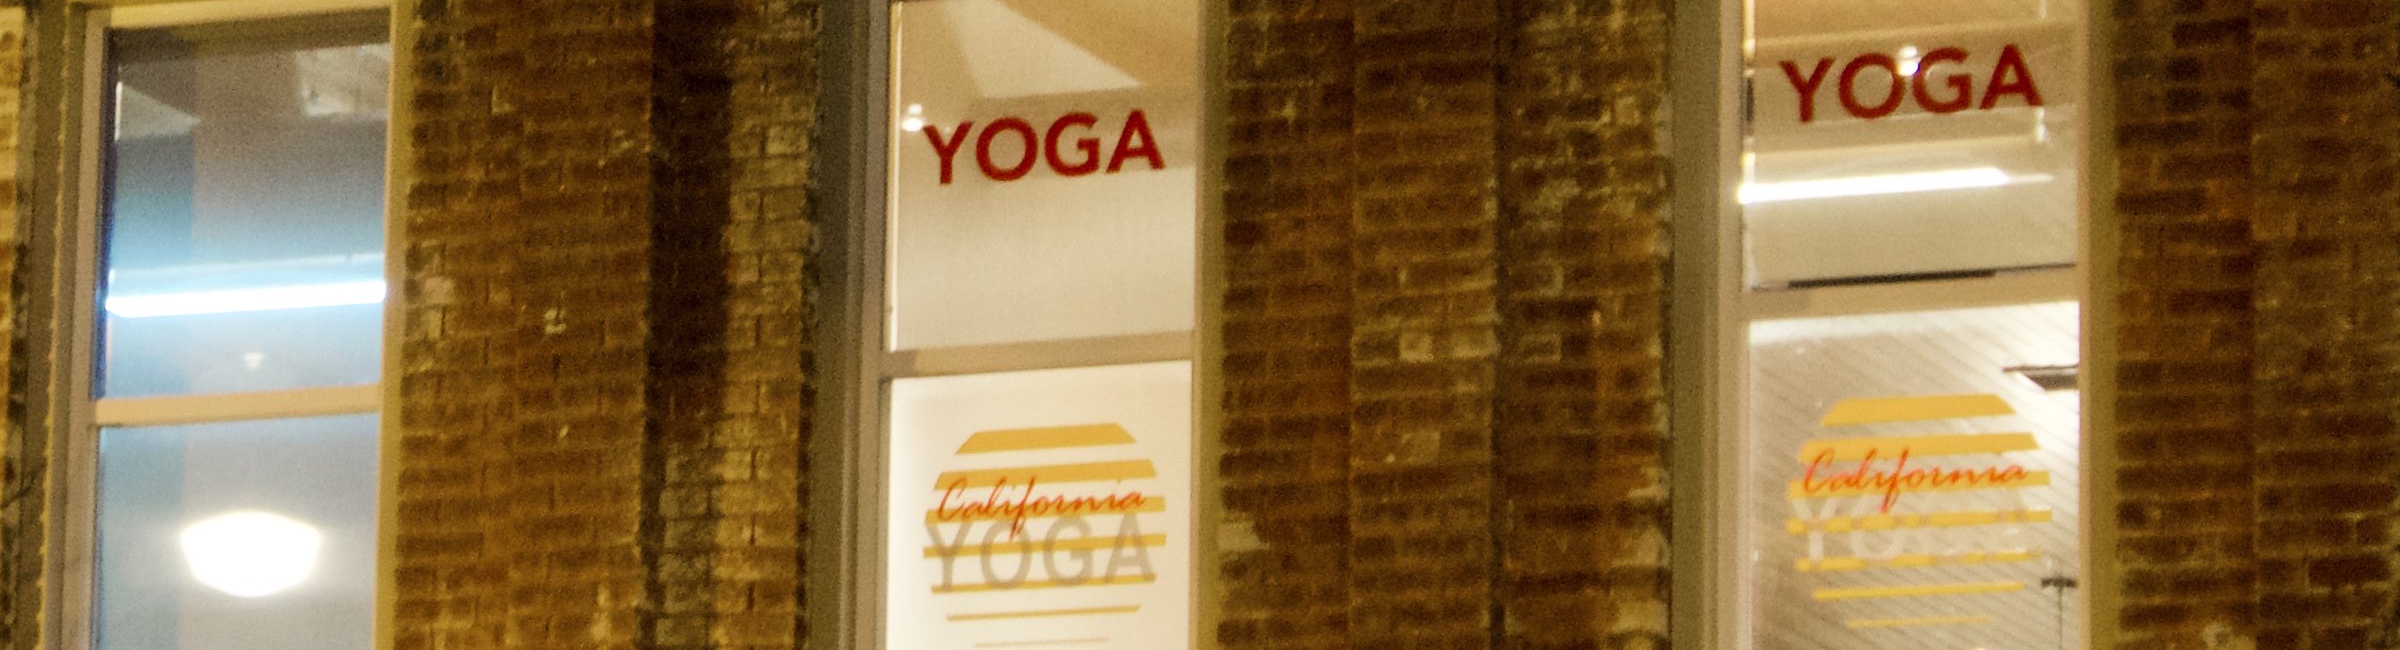 Yoga studio windows